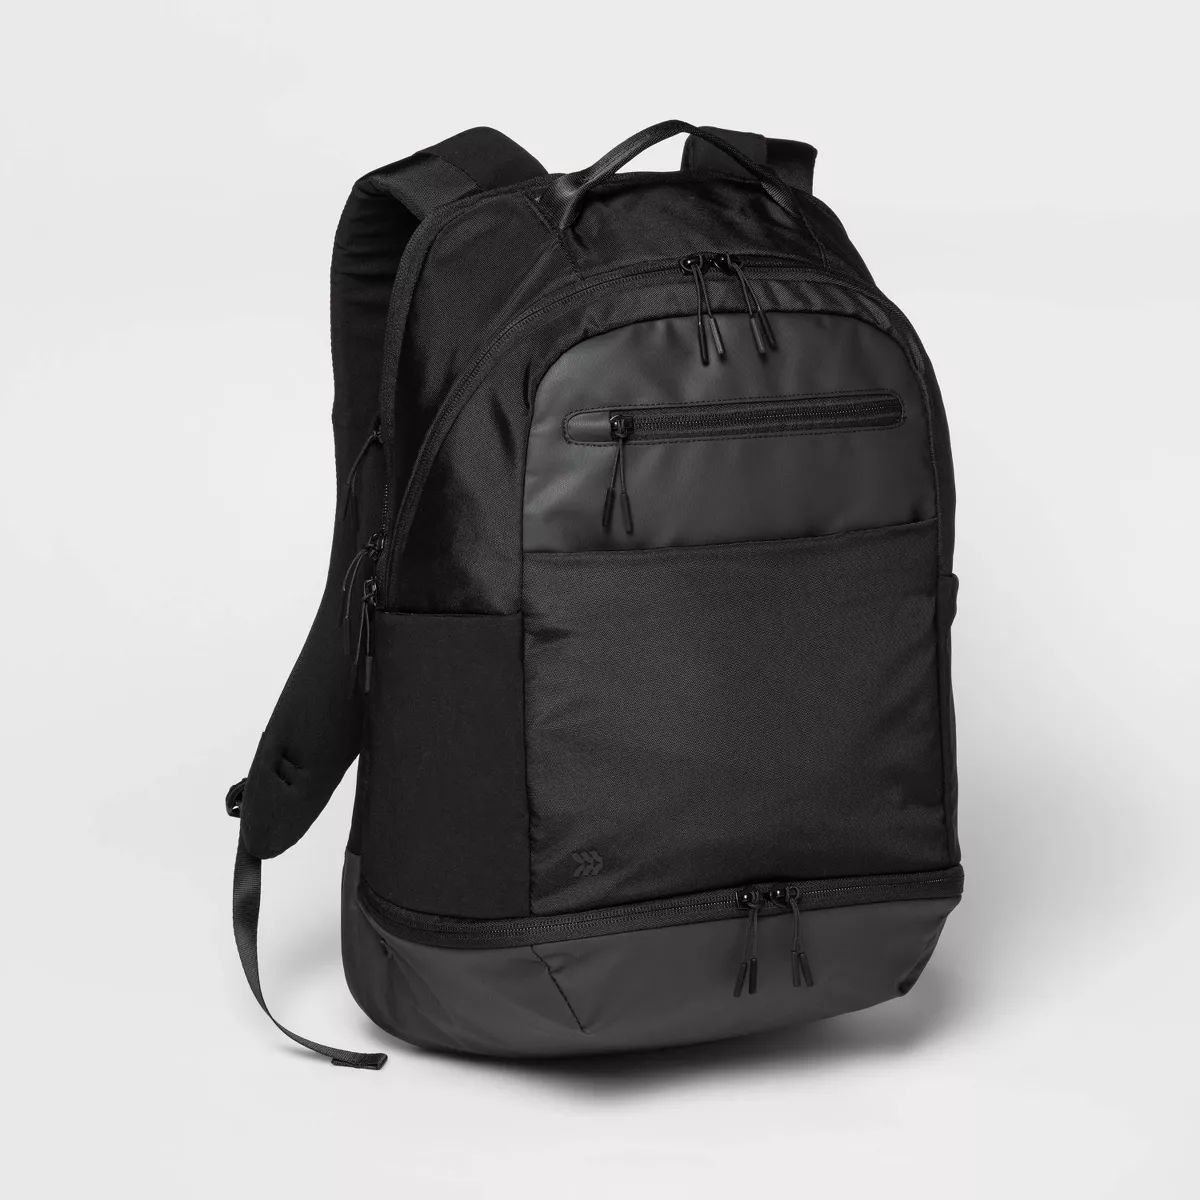 19" Backpack Black - All in Motion™ | Target